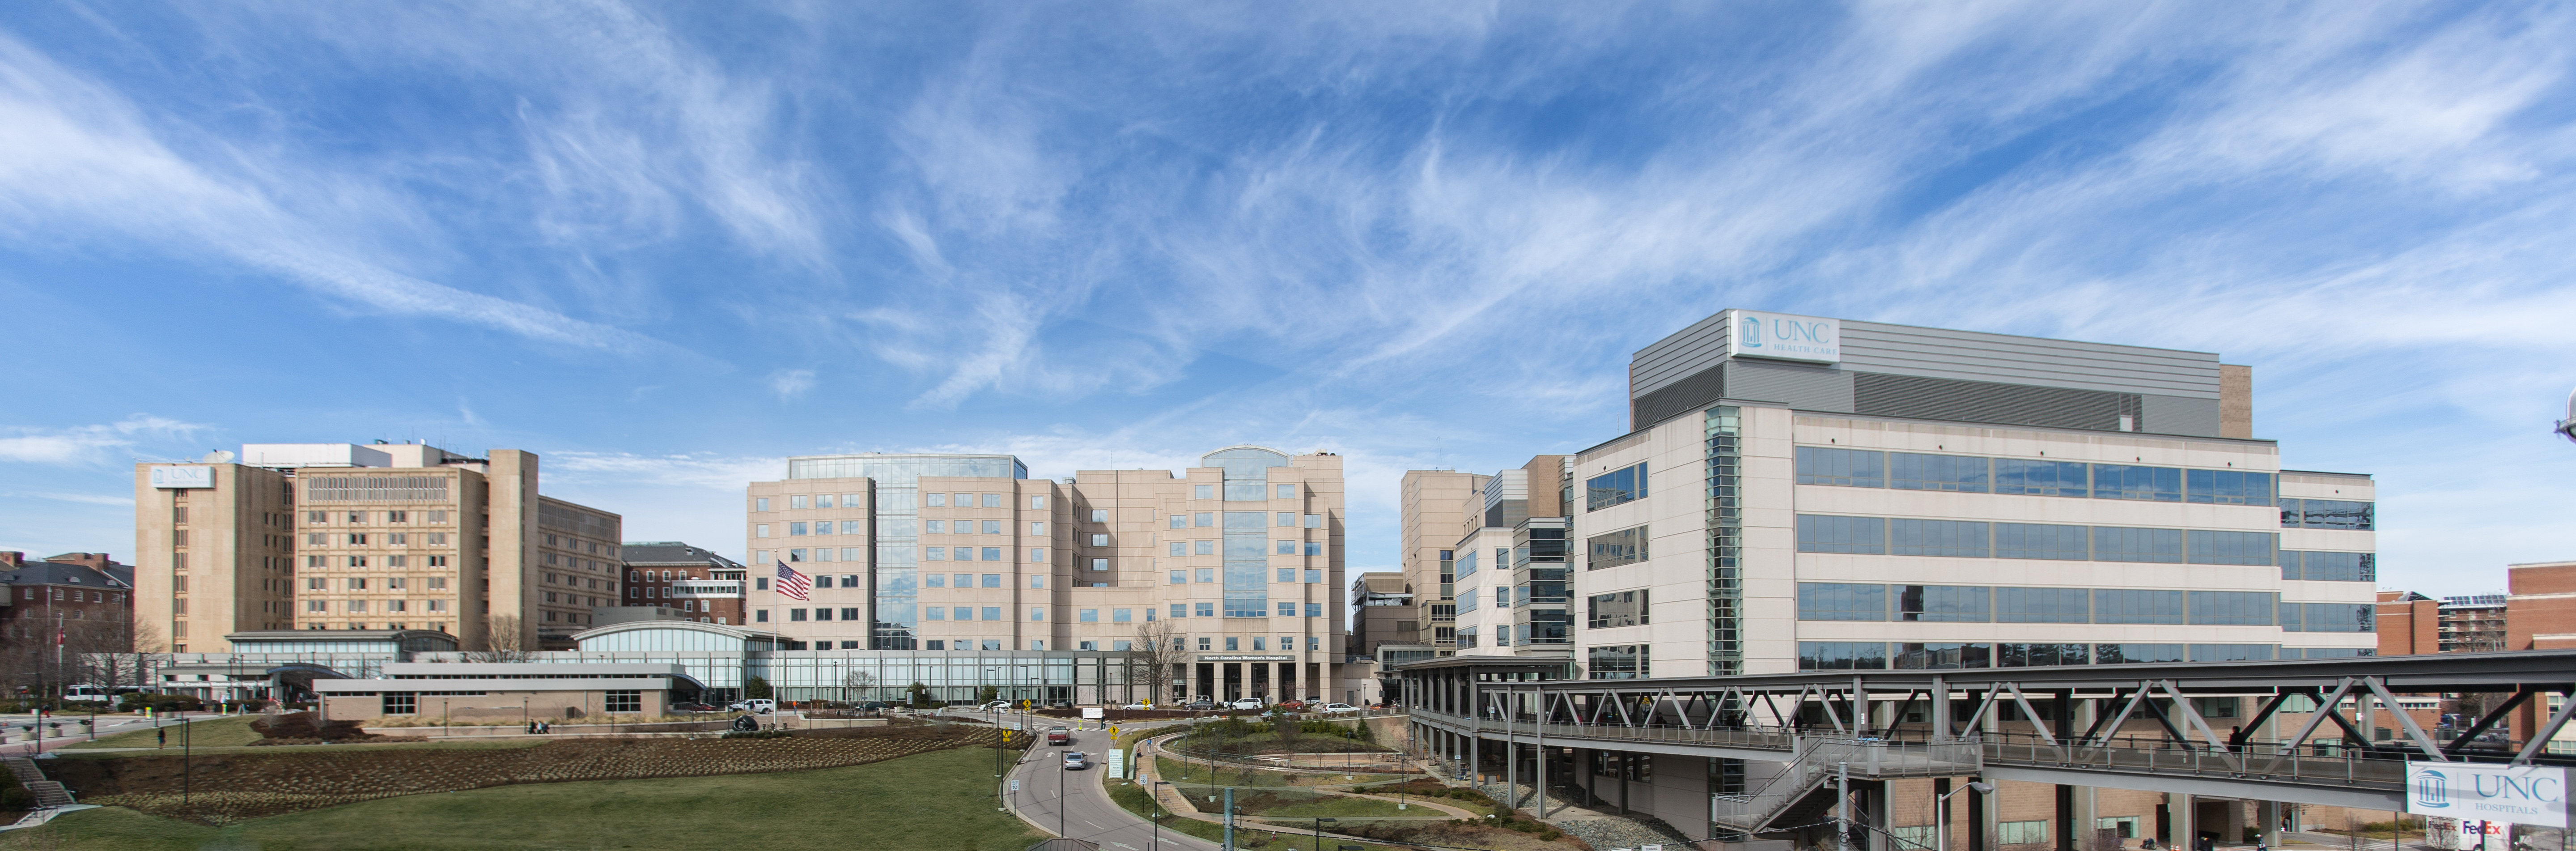 University of North Carolina Medical Center